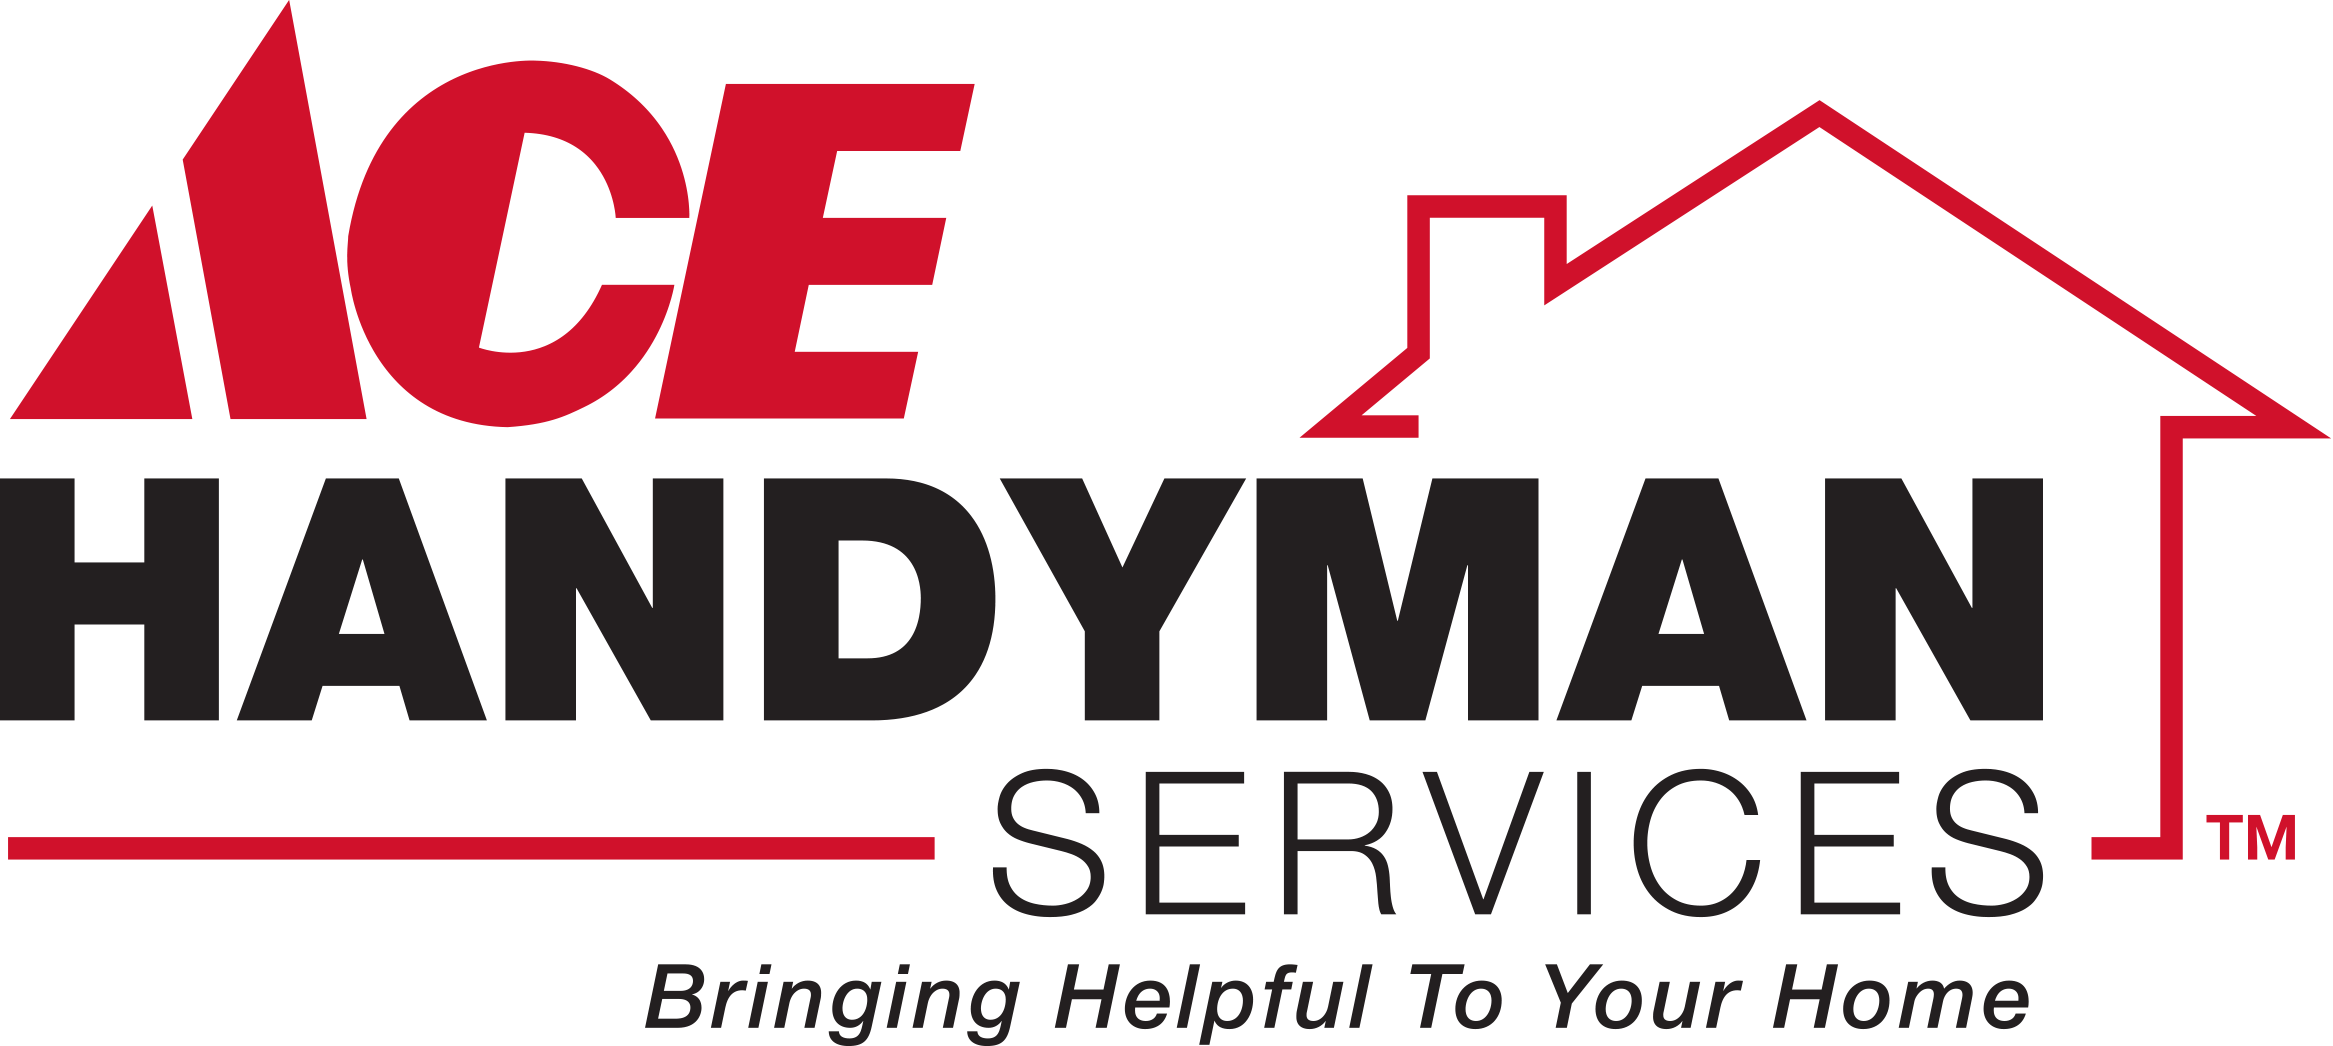 Ace Handyman Services - Southern Maine Logo